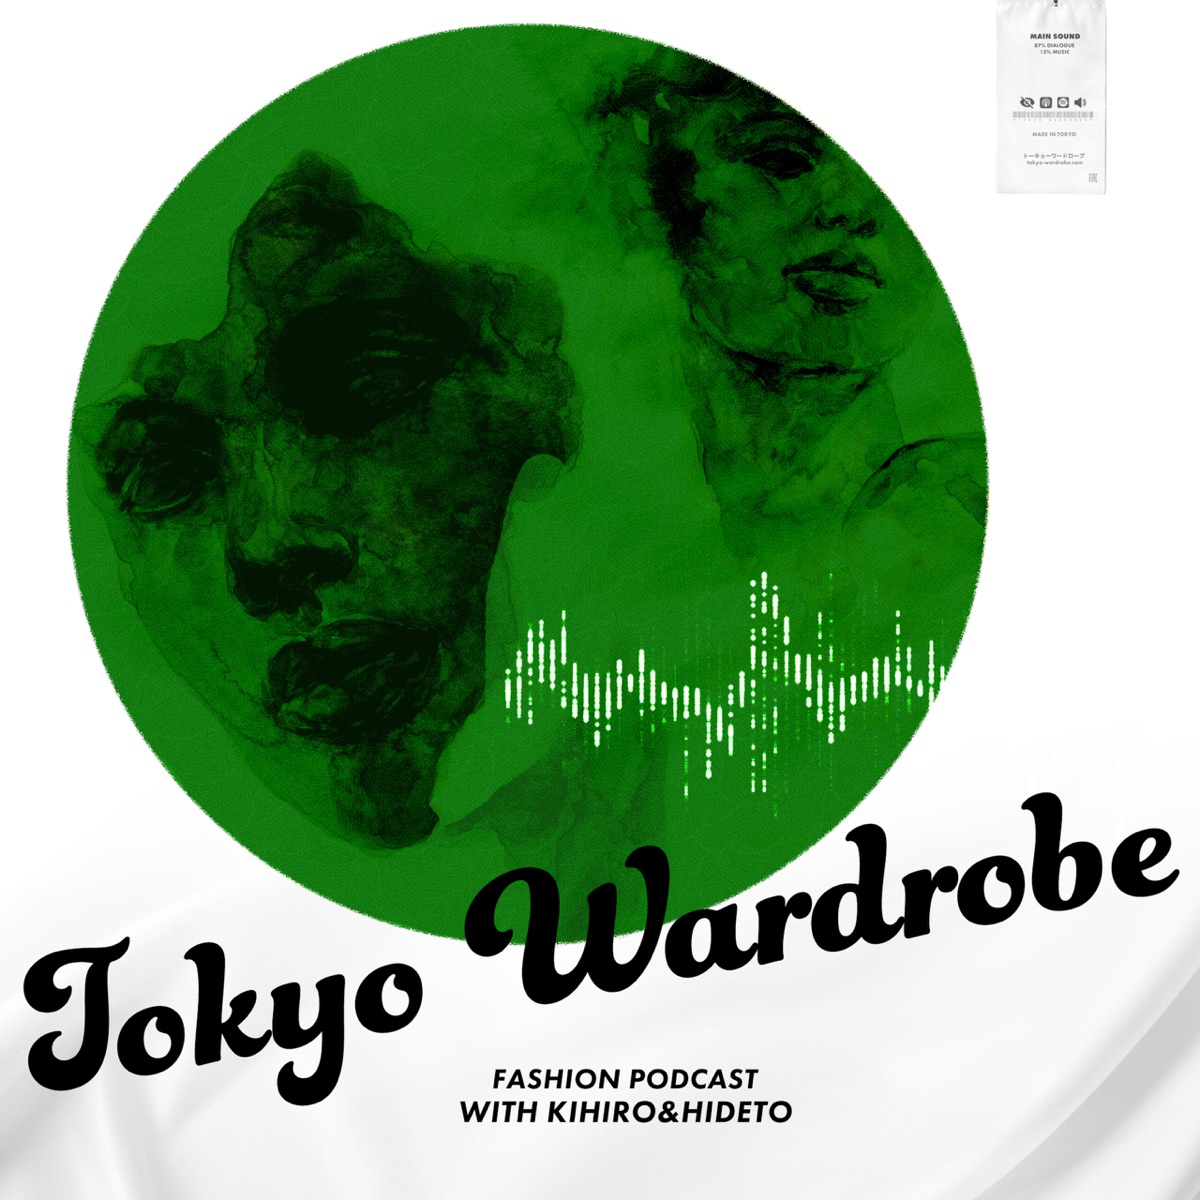 Tokyo Wardrobe Podcast Podtail